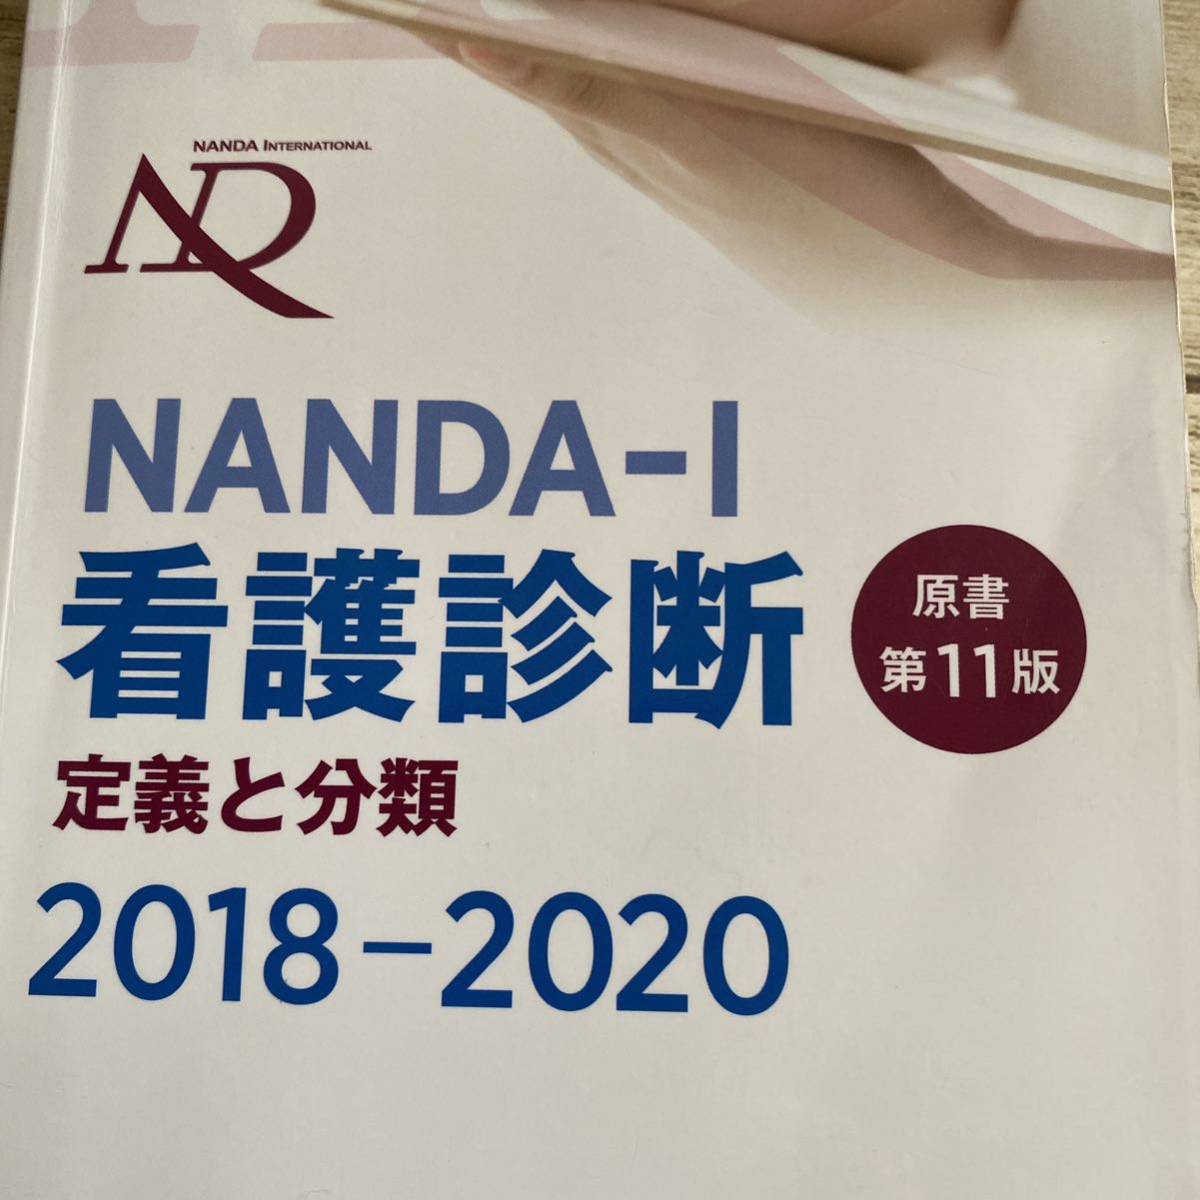 NANDA-I 看護診断 定義と分類 2018-2020